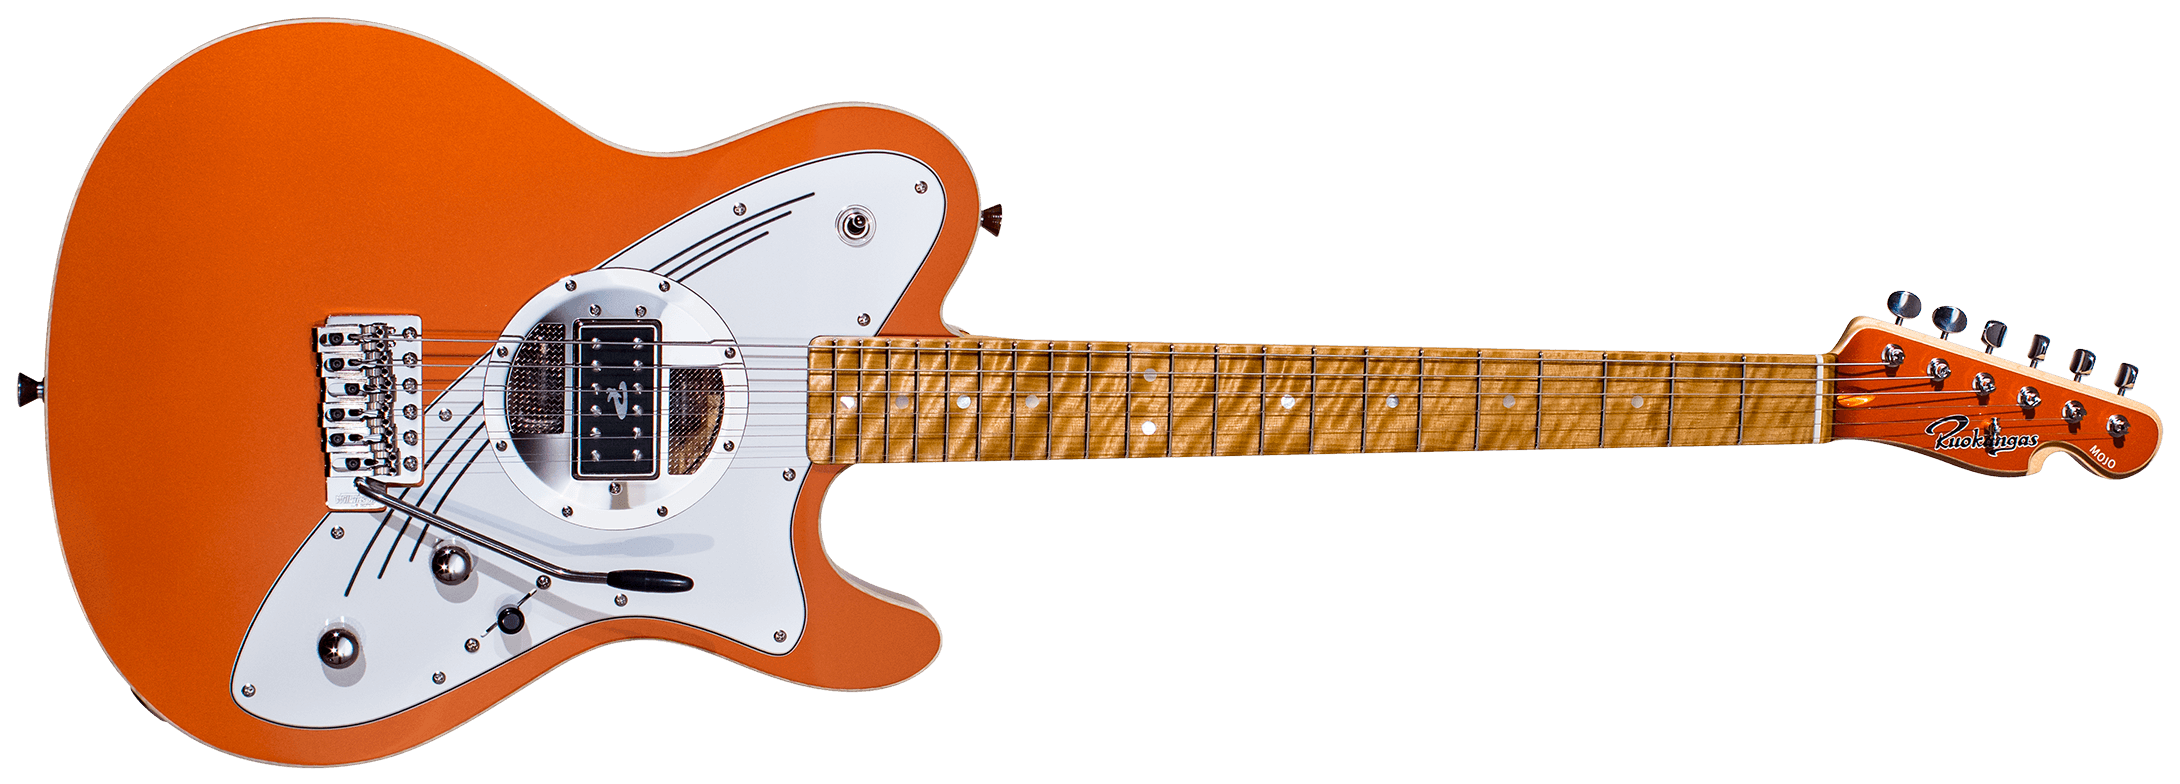 NAMM 2019》第一款真空管拾音器Valvebucker吉他發表